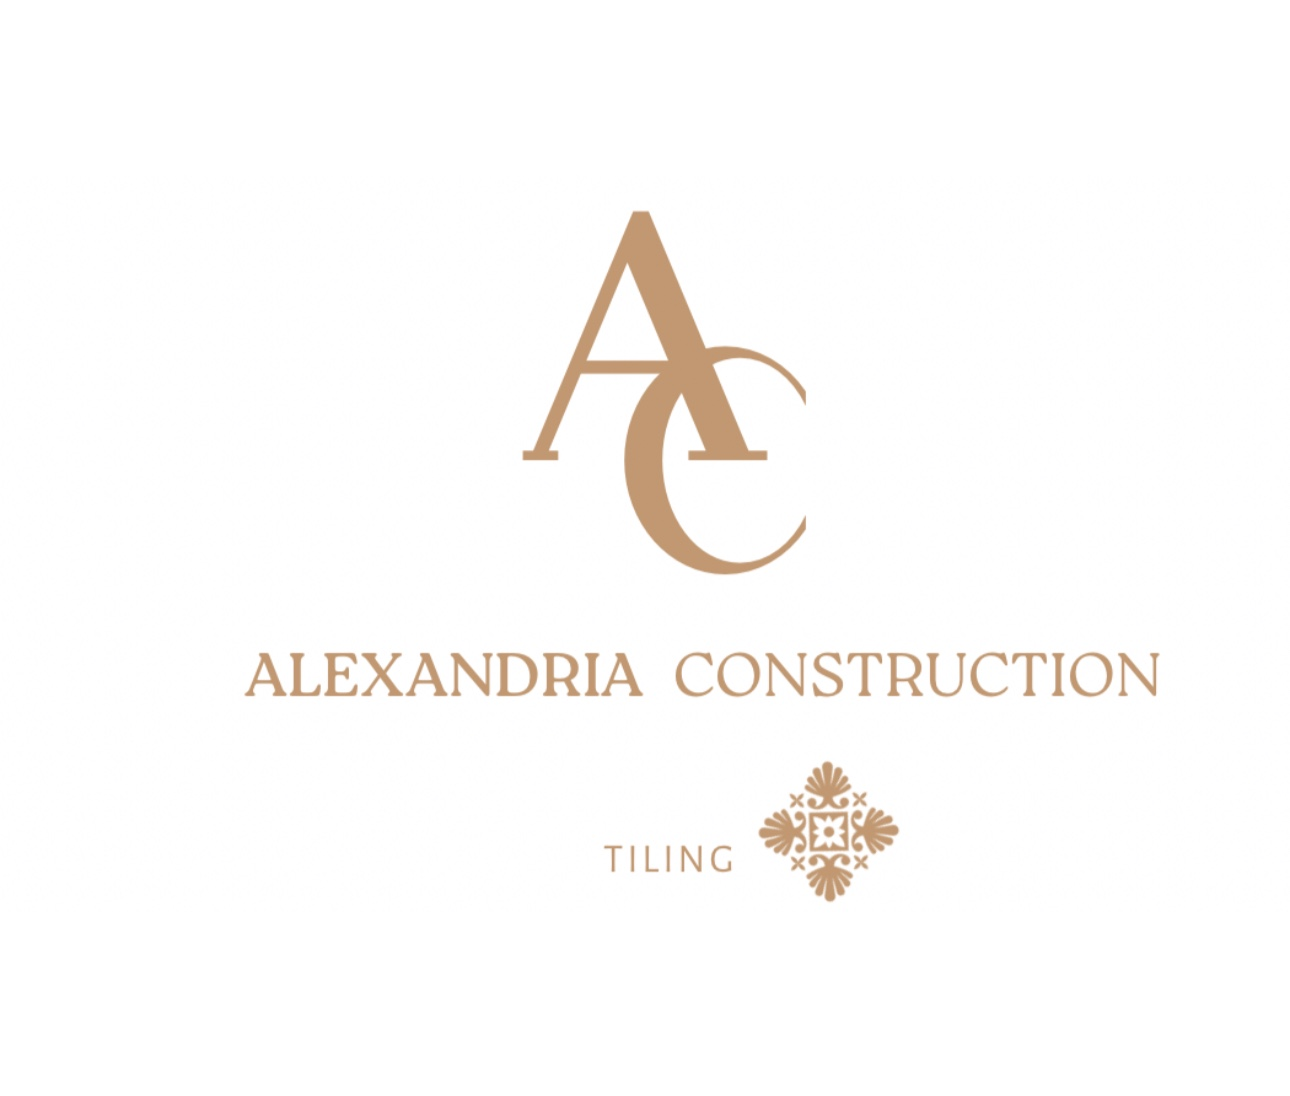 Alexandria Construction's logo